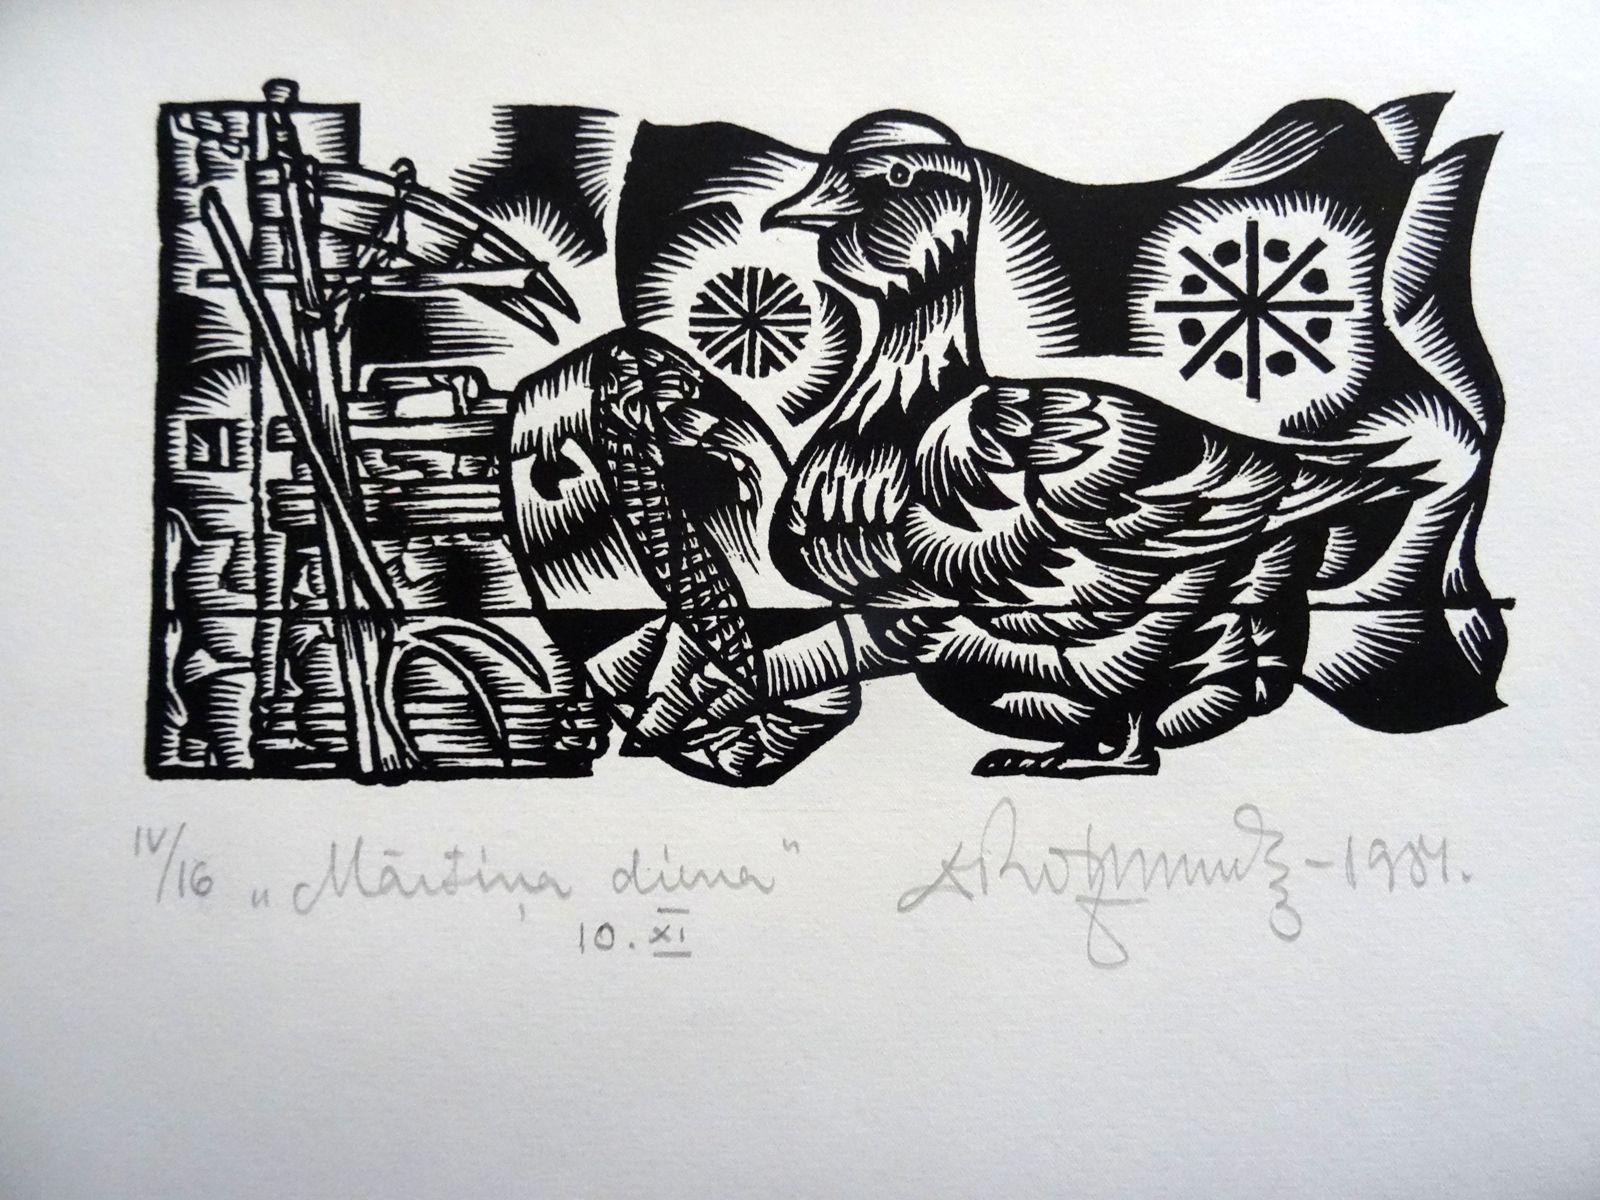 Dainis Rozkalns Animal Print – Martins-Tag. 1984. Papier, Linolschnitt, 25x34 cm